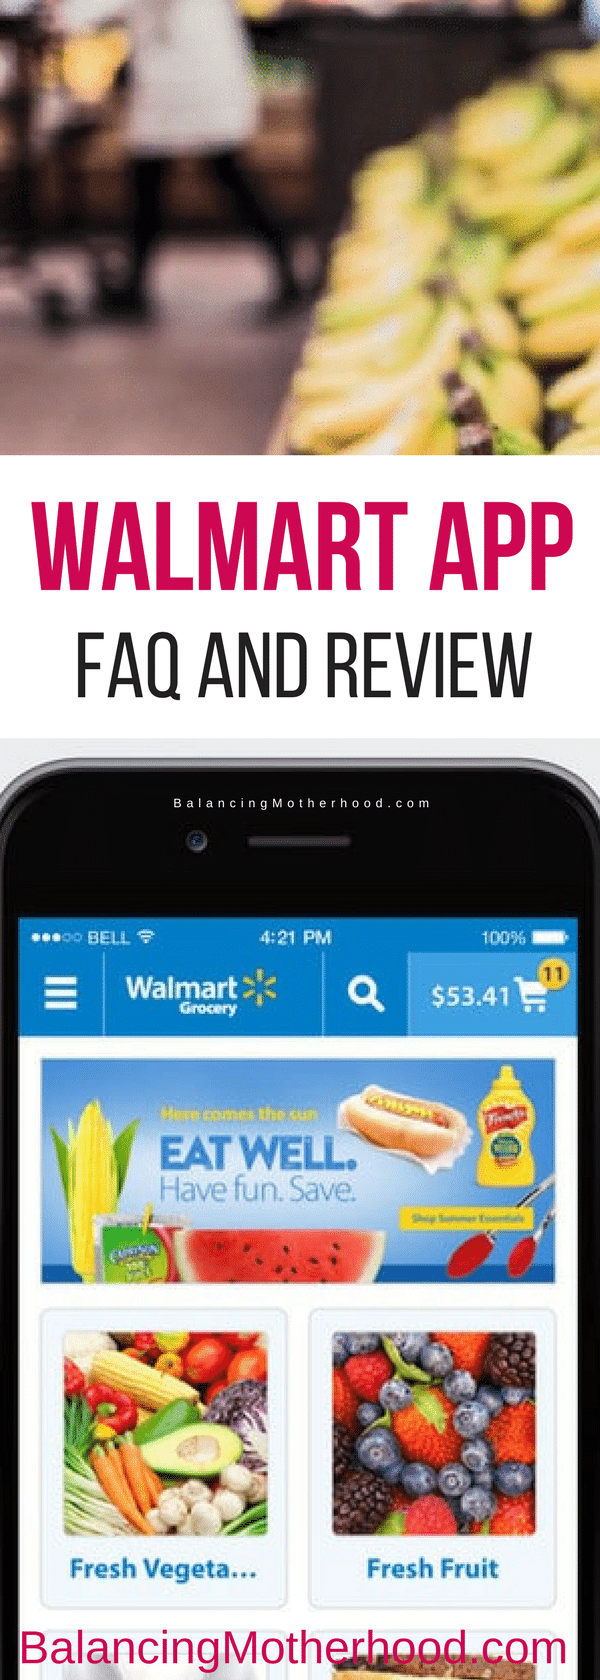 Walmart App Review and FAQ